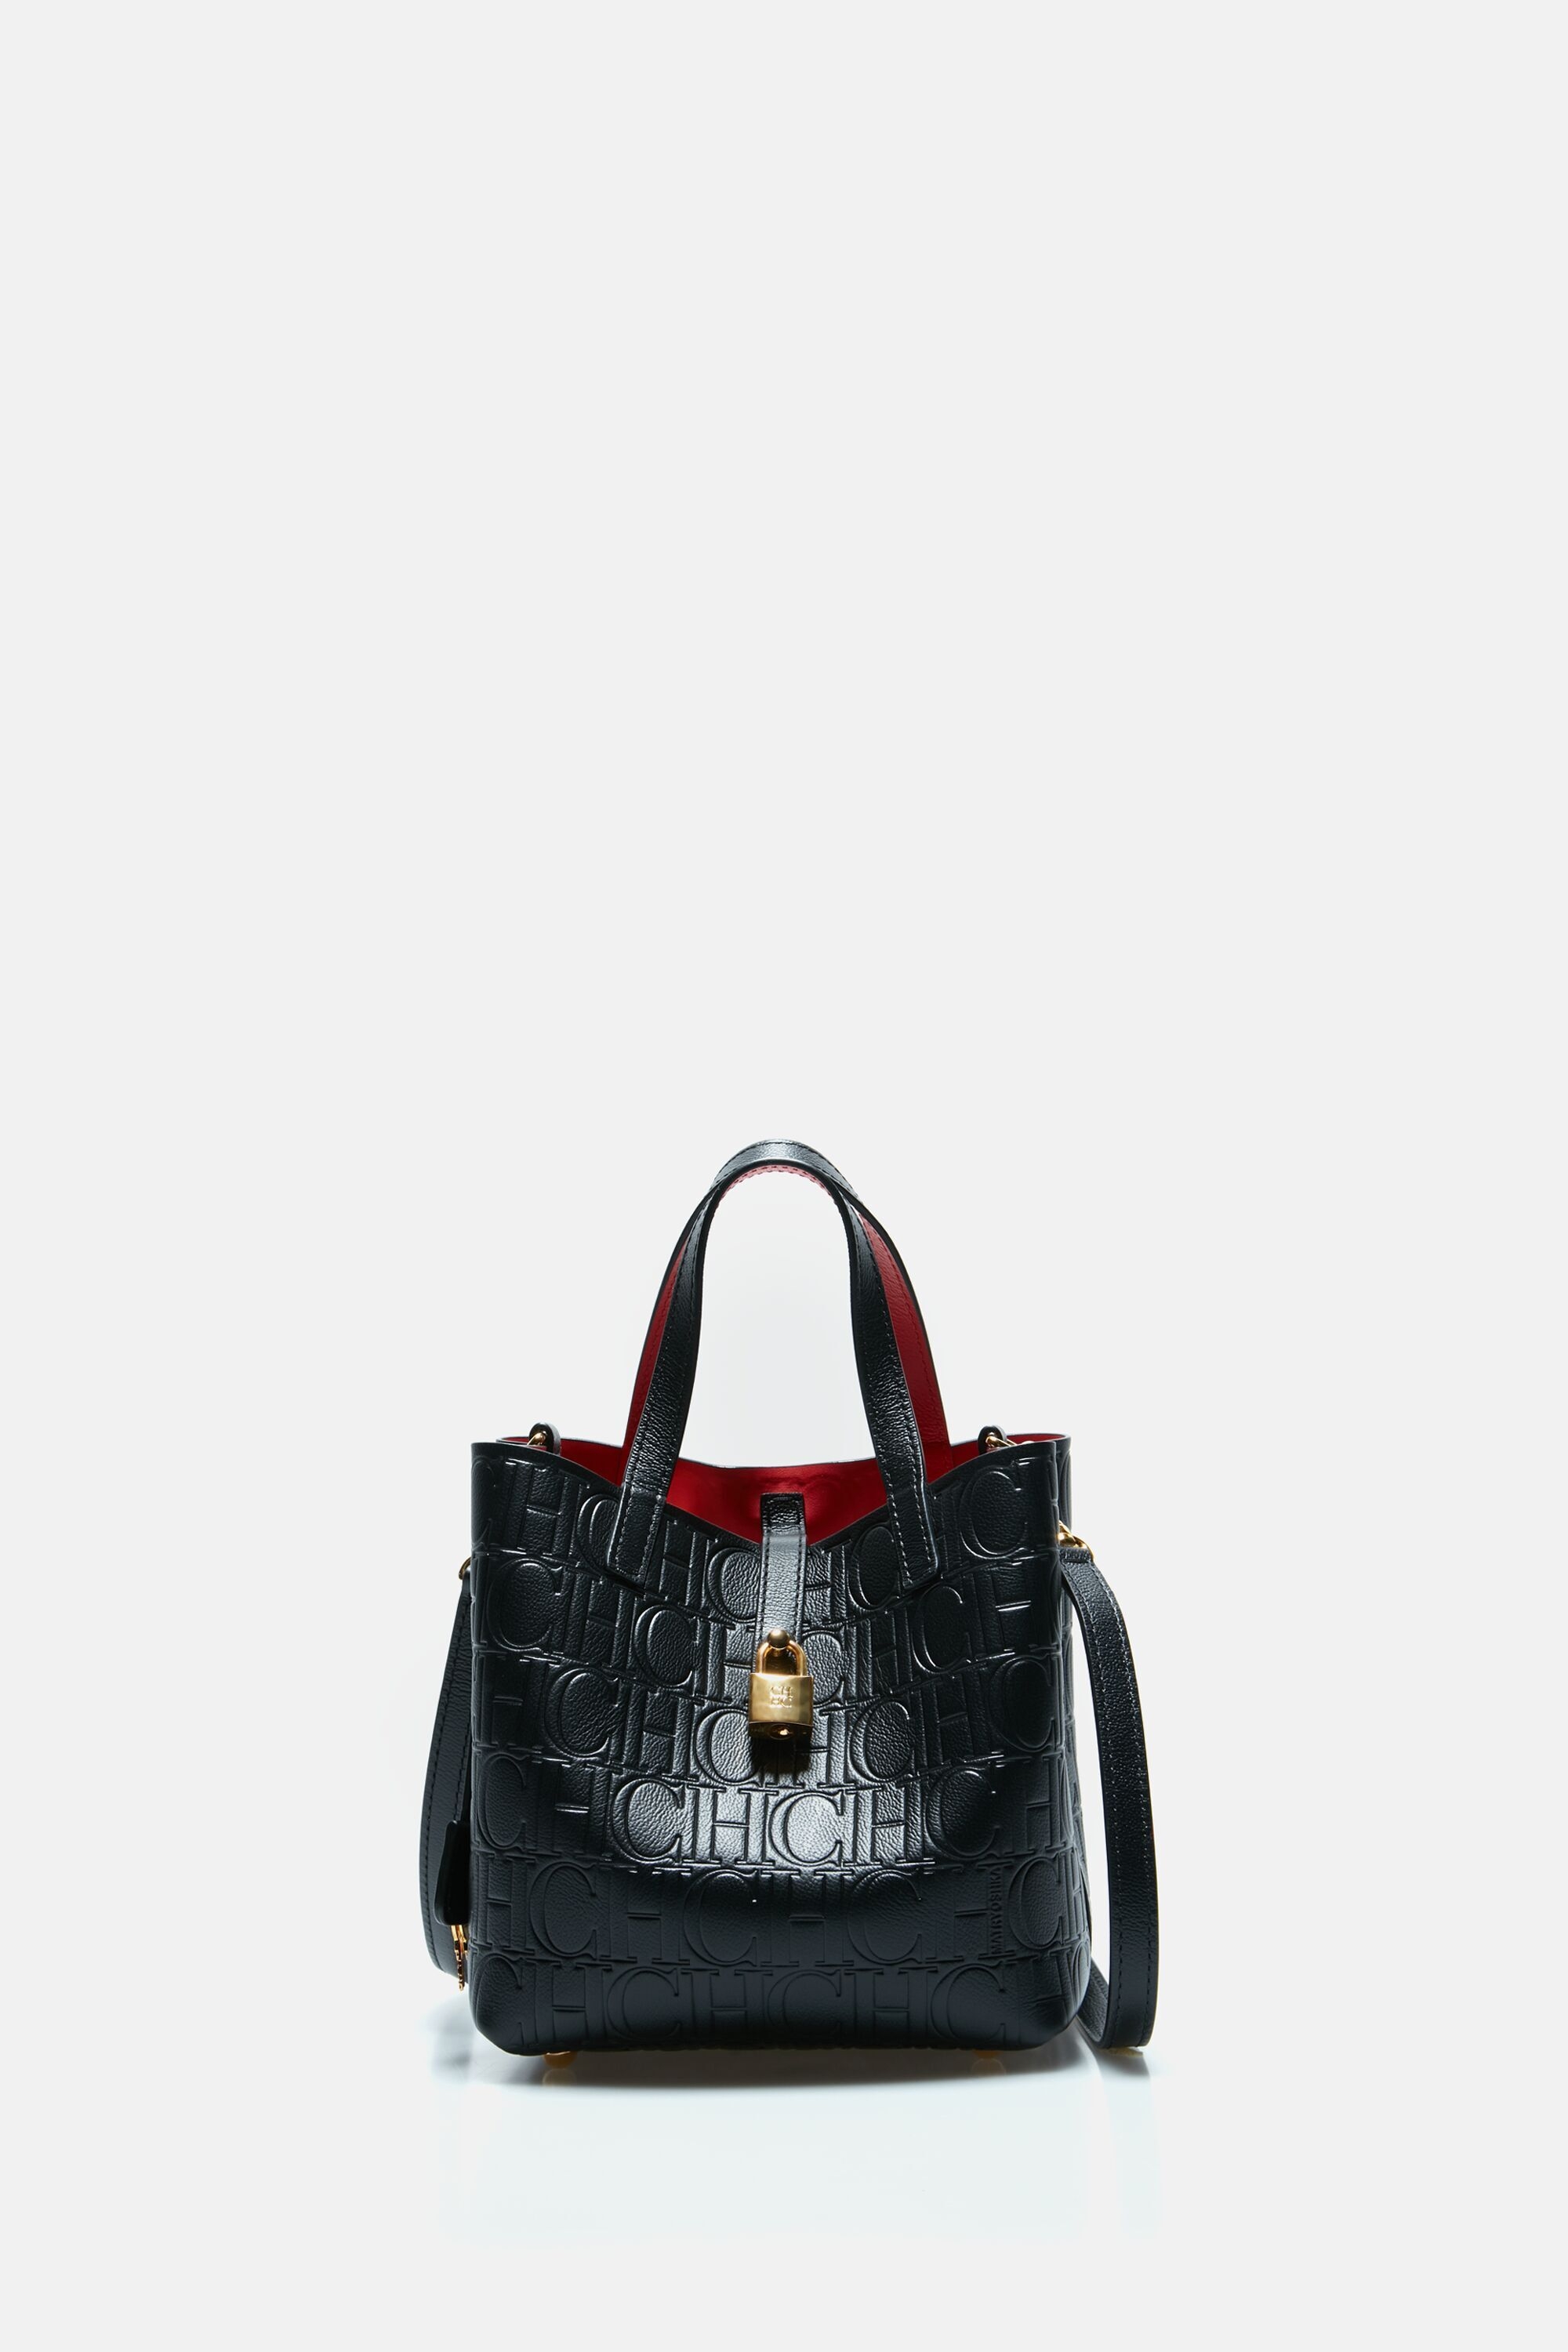 Carolina Herrera Black Leather MATRYOSHKA CH Handbag